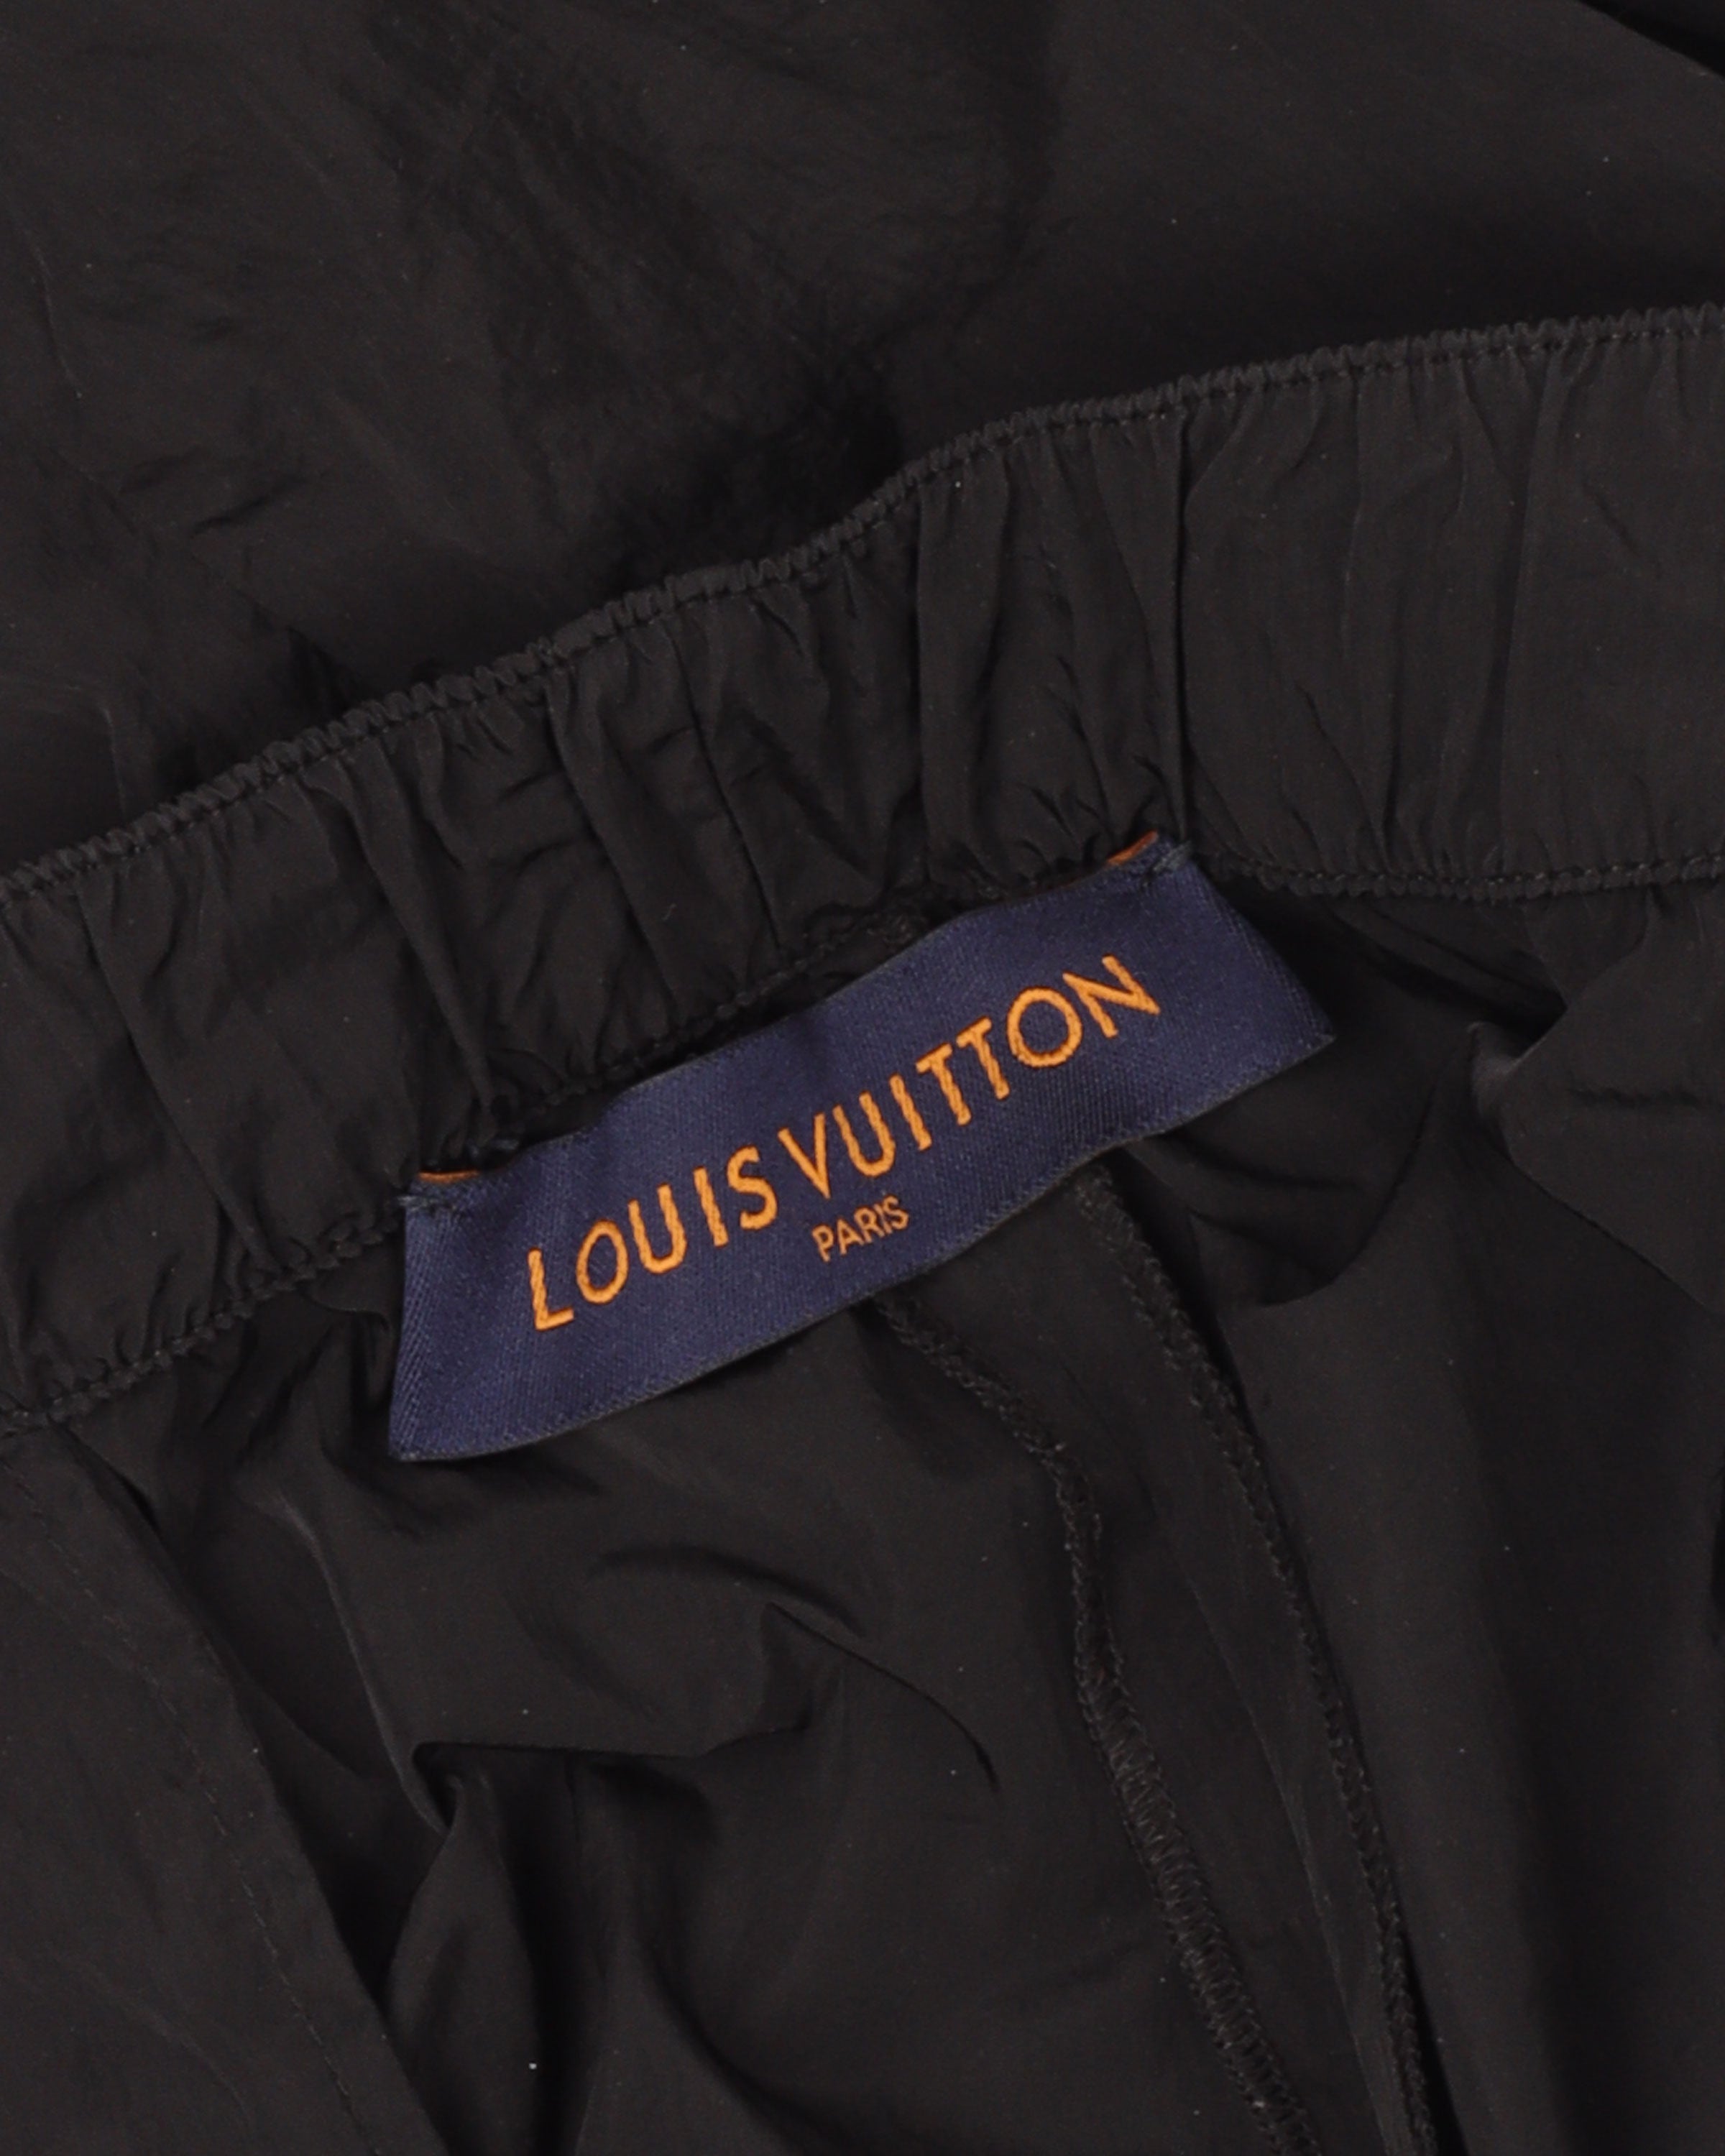 Outlander Magazine on X: Louis Vuitton 2054 Cargo Pants🔍 https